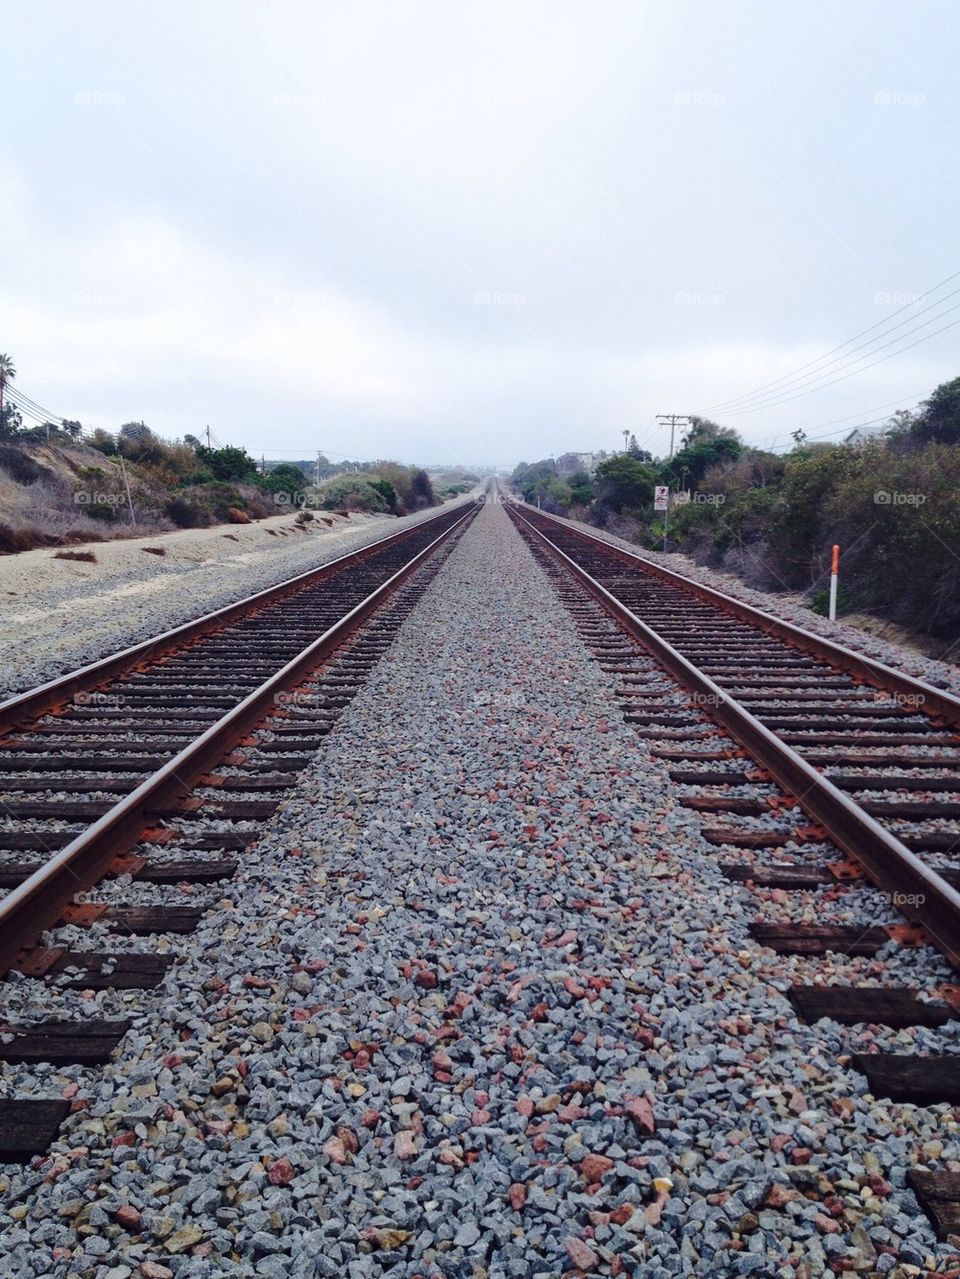 Between the tracks